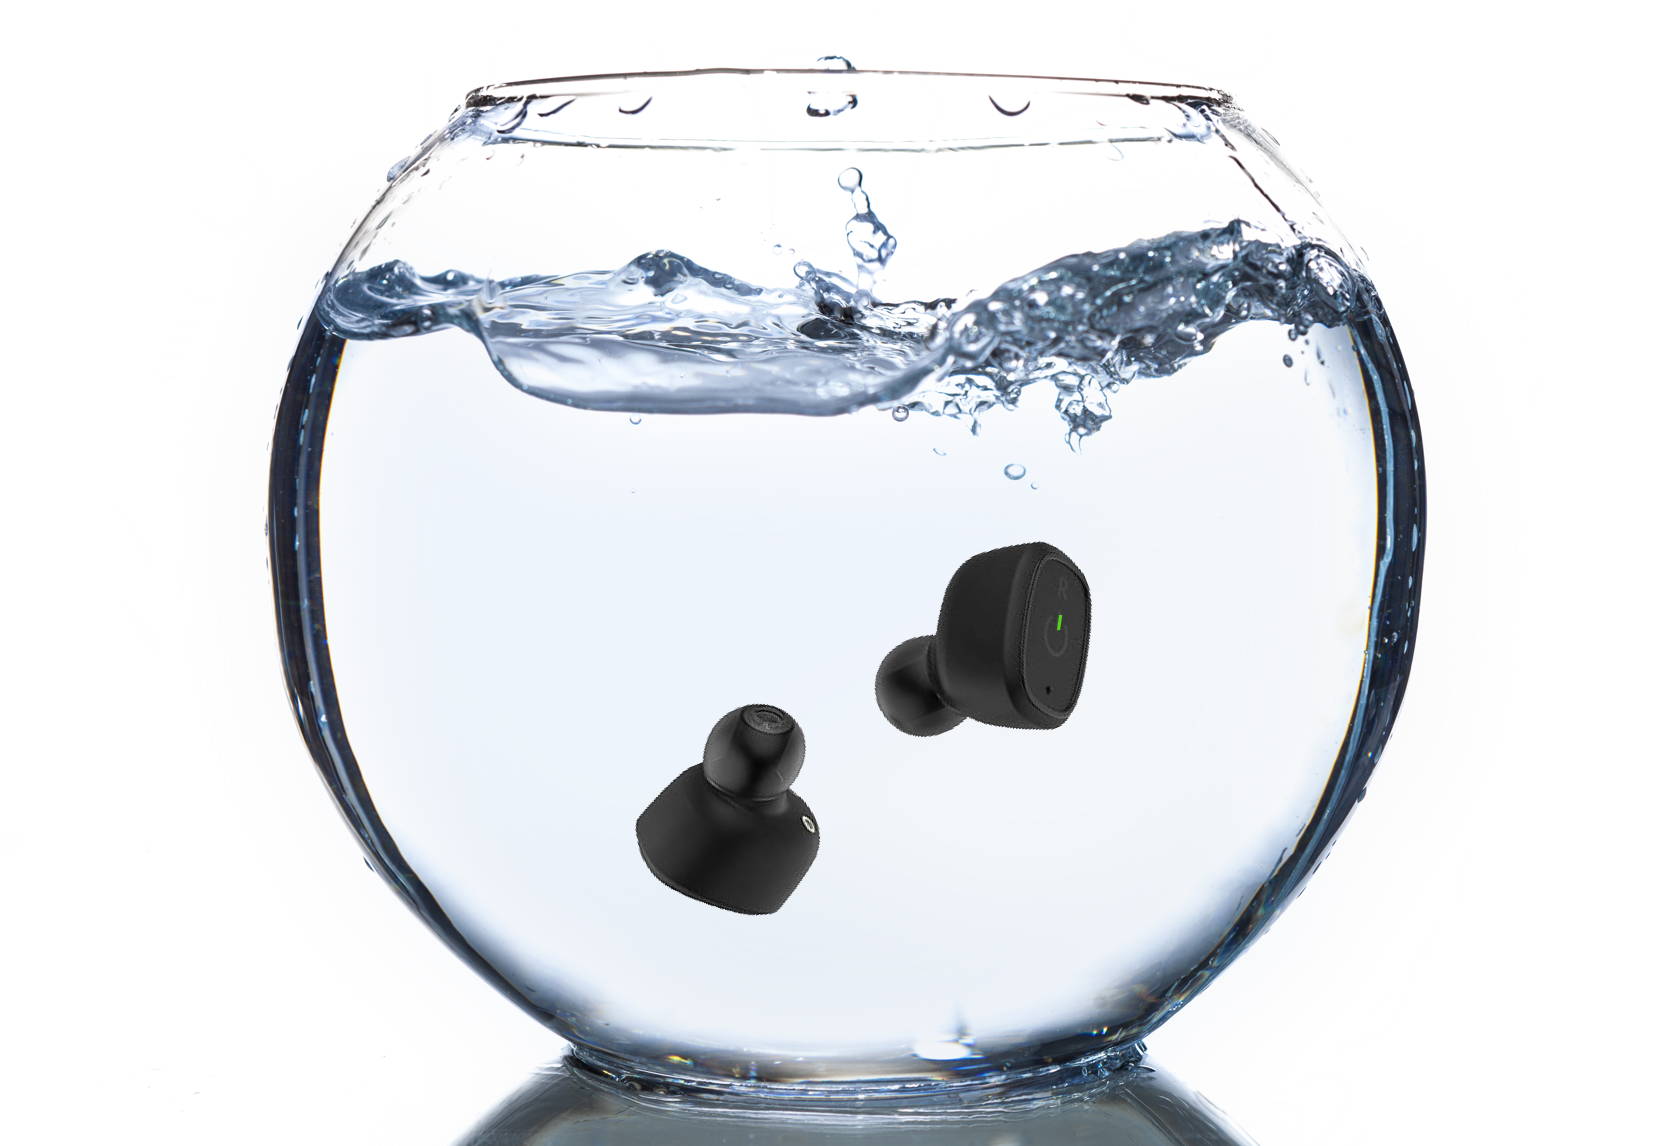  xS2 Waterproof Earbuds in  fish bowl full of water